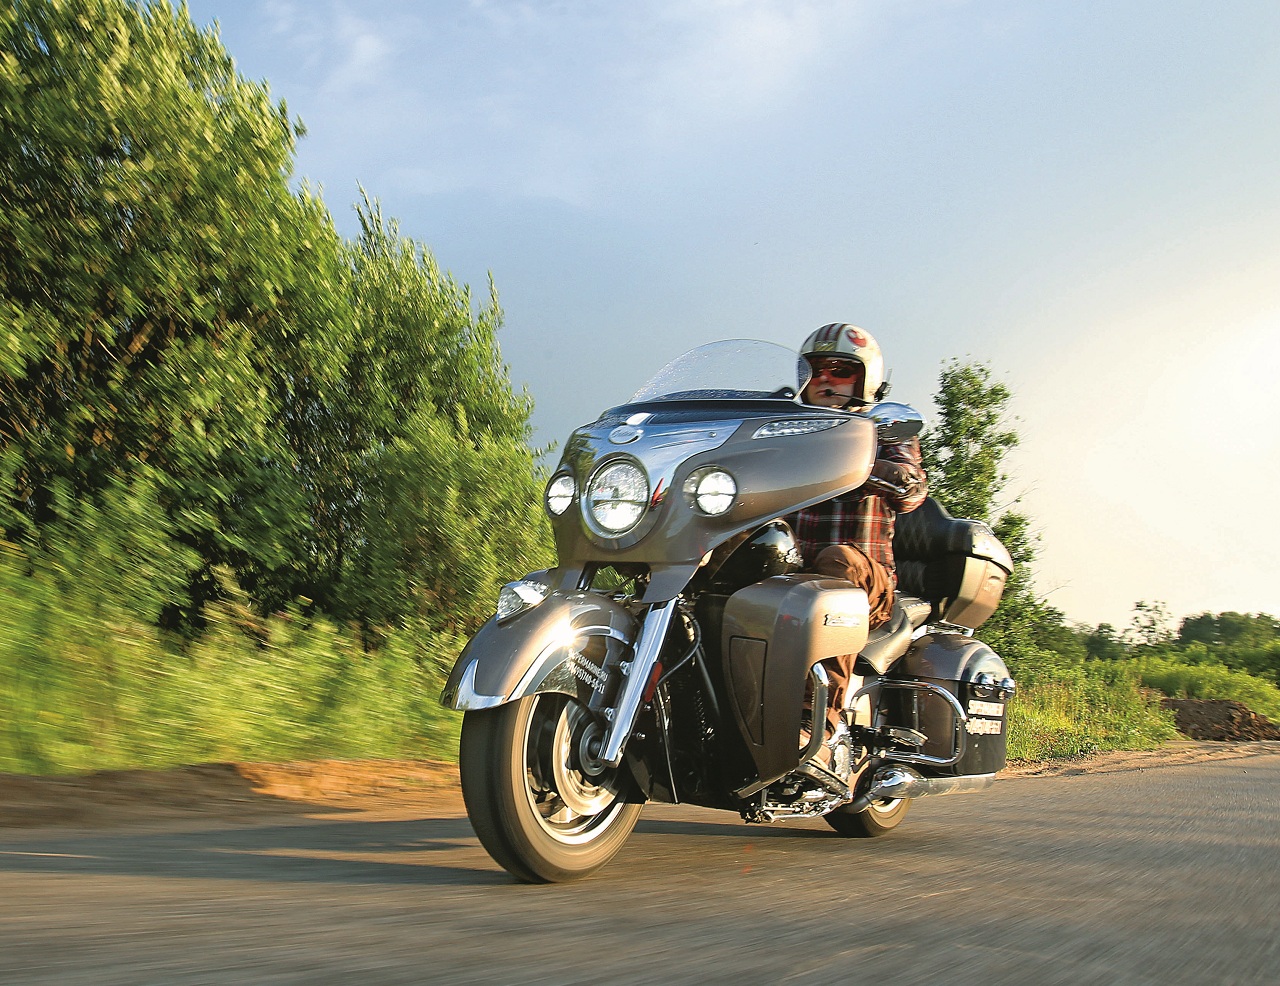 Тест Indian Roadmaster и Yamaha Star Venture: На абордаж! - Журнал "МОТО", Журнал Мото, Мото56